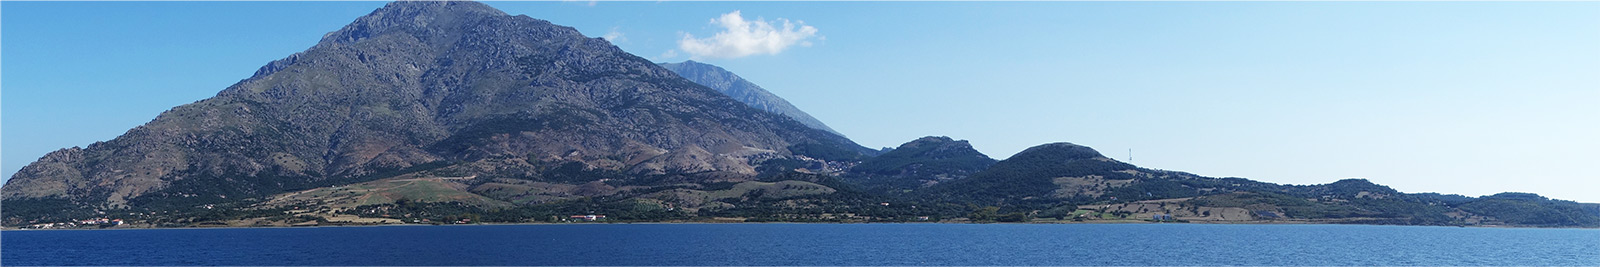 The island of Samothrace